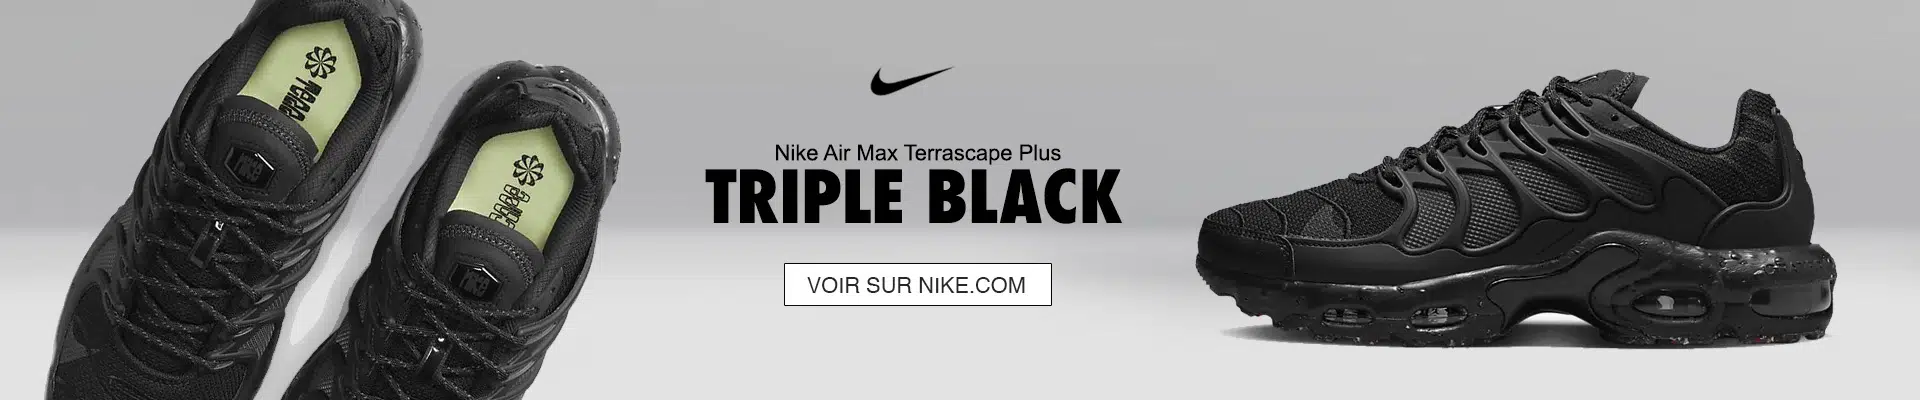 Air Max Plus Terrascape Triple Black